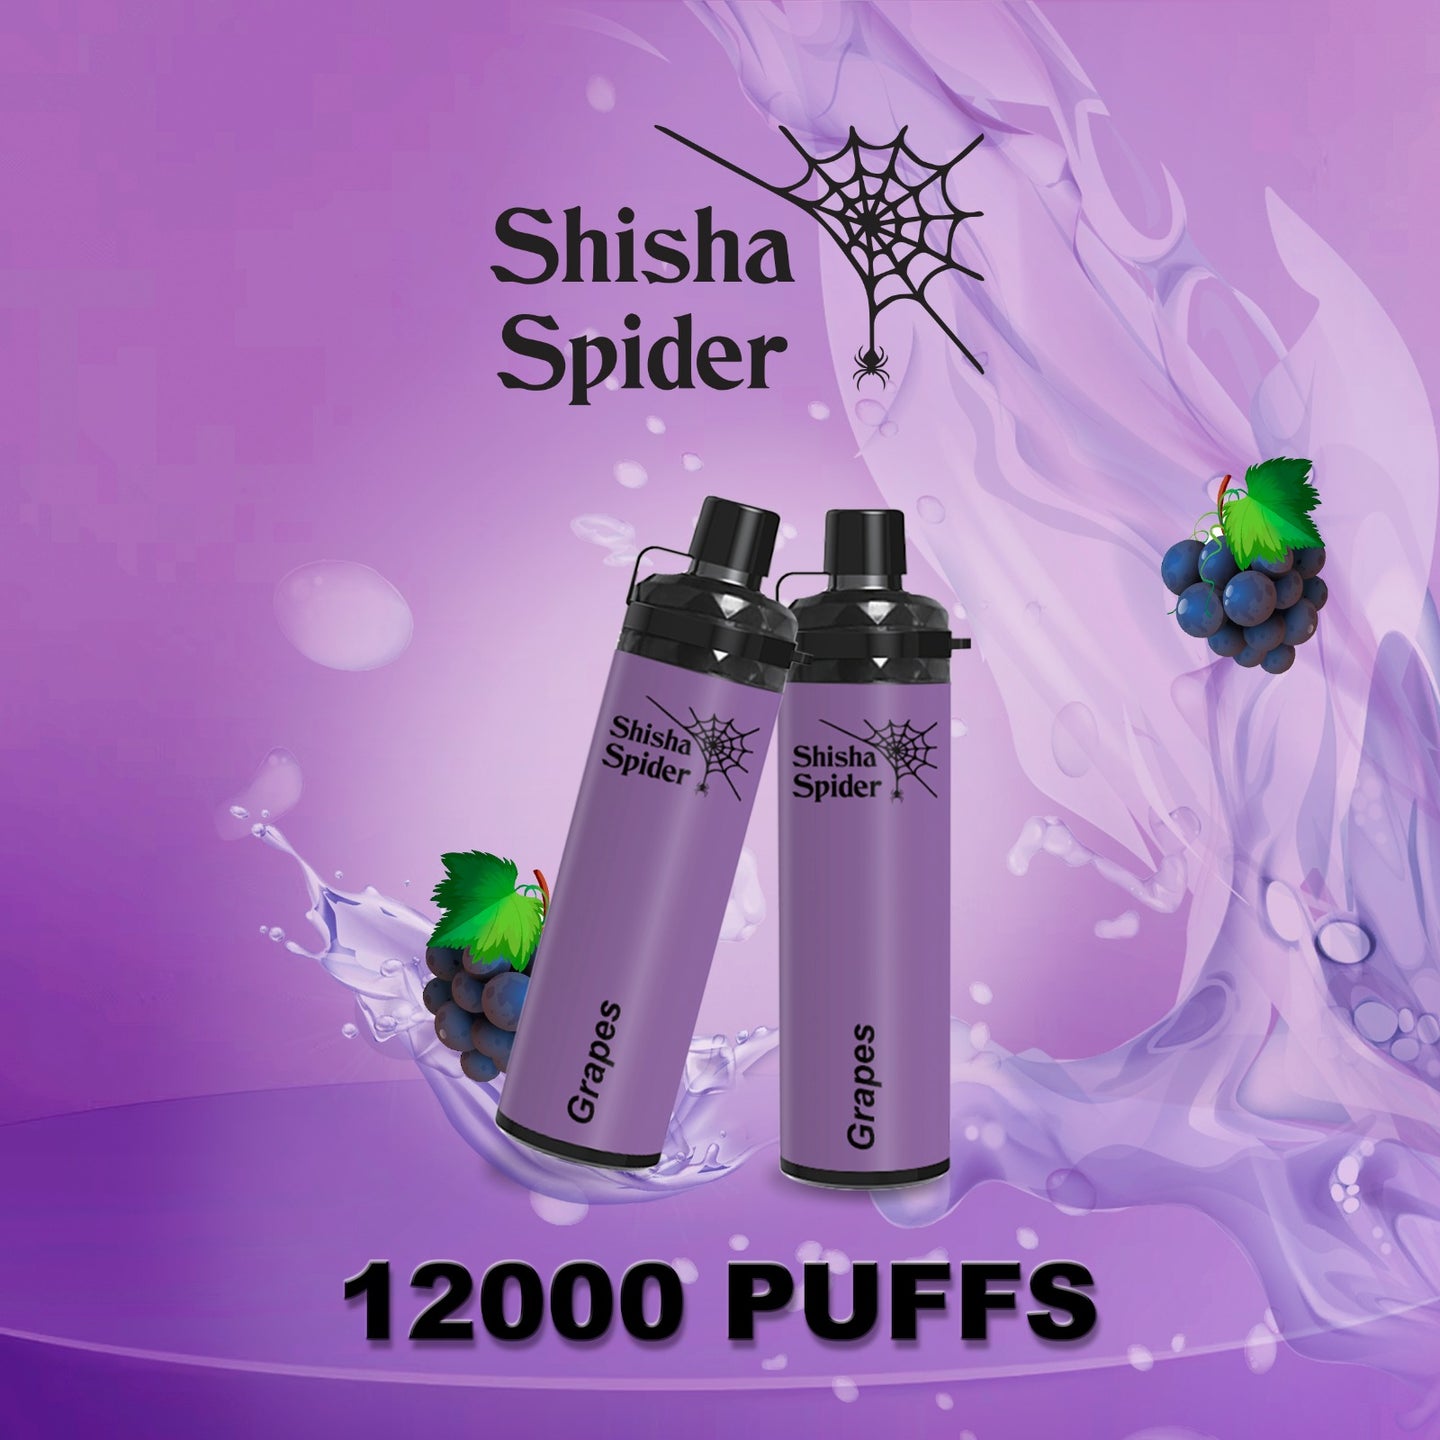 Shisha Spider ענבים 🍇 12000 שאיפות